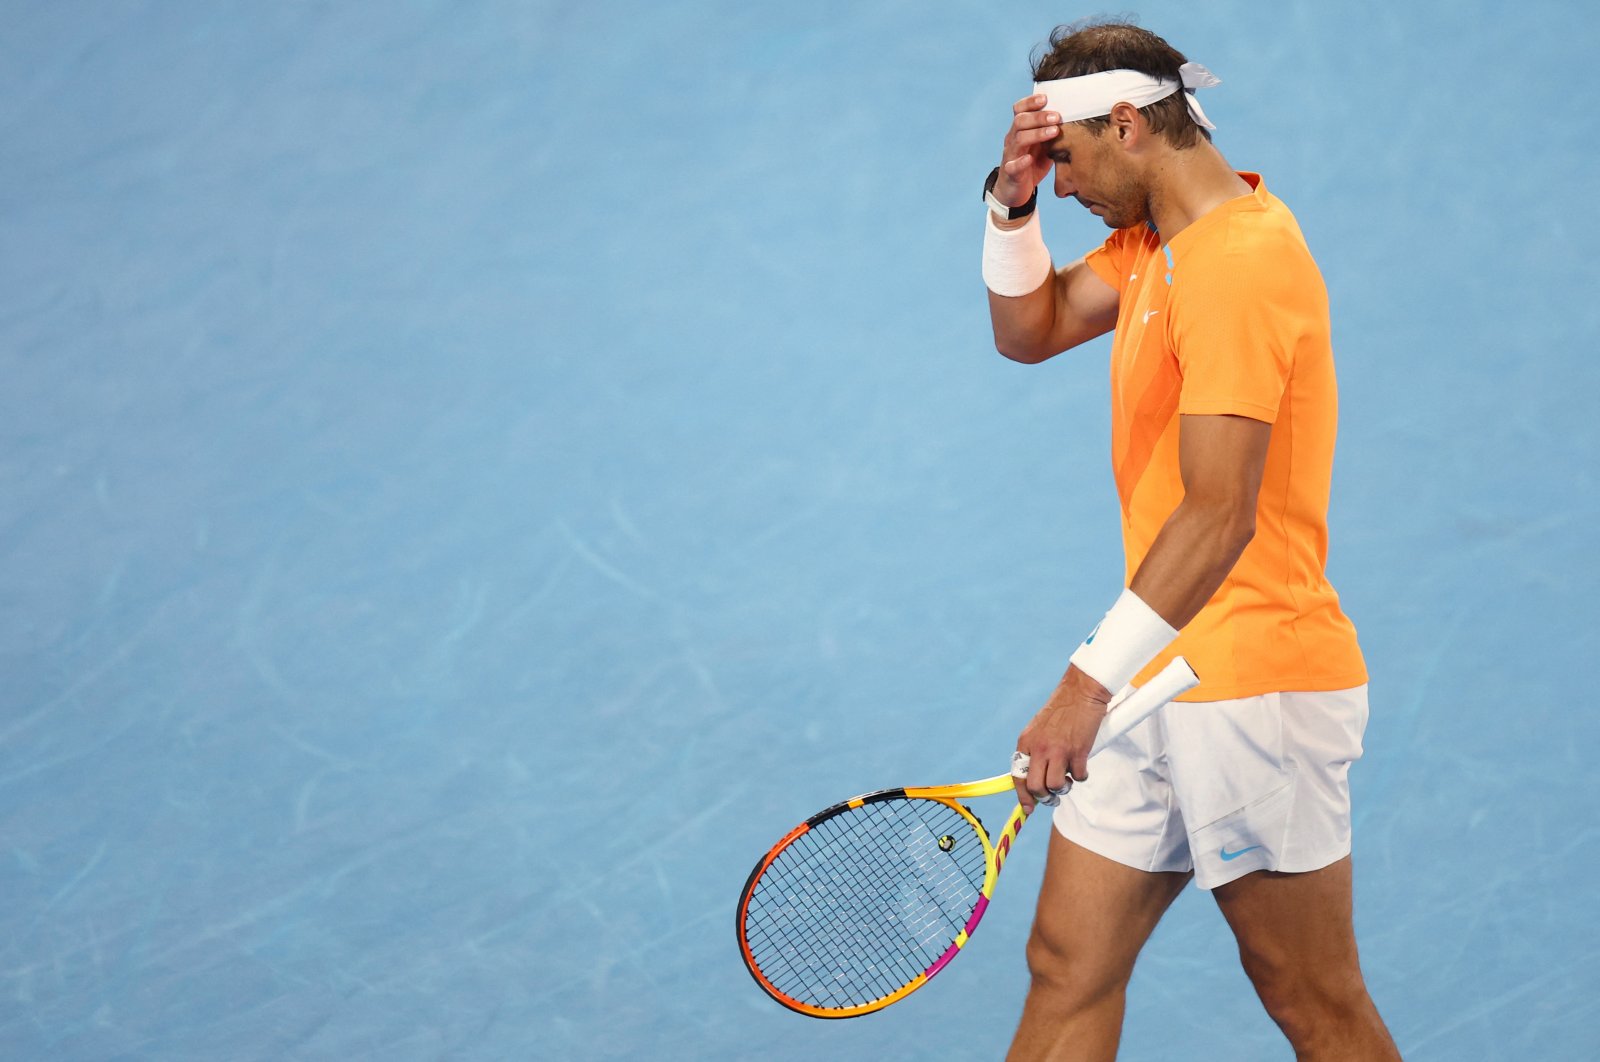 Juara bertahan Nadal tersingkir dari Australia Terbuka setelah pertandingan yang dilanda cedera